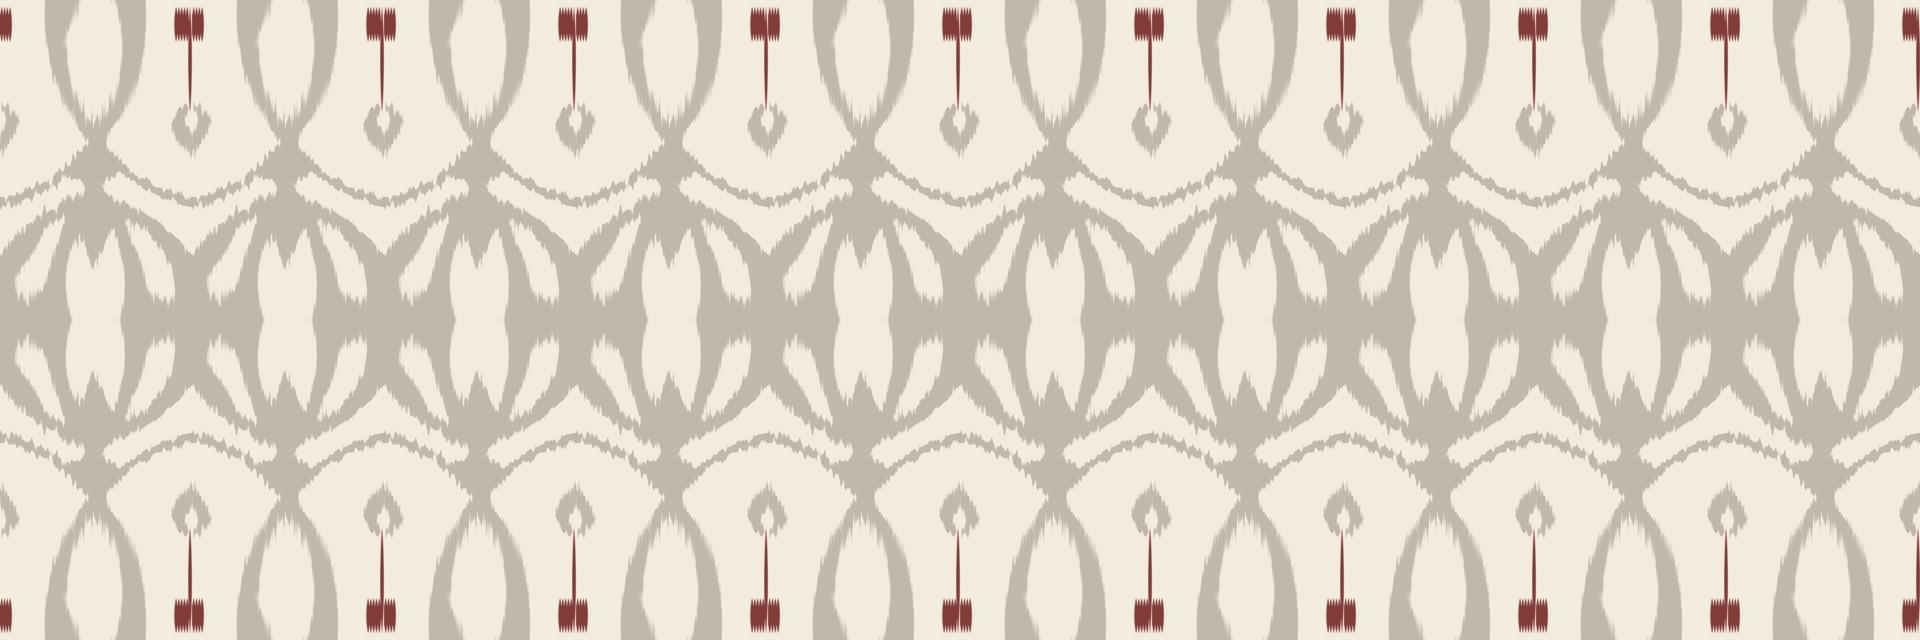 ikat grenze tribal afrika nahtloses muster. ethnische geometrische ikkat batik digitaler vektor textildesign für drucke stoff saree mughal pinsel symbol schwaden textur kurti kurtis kurtas